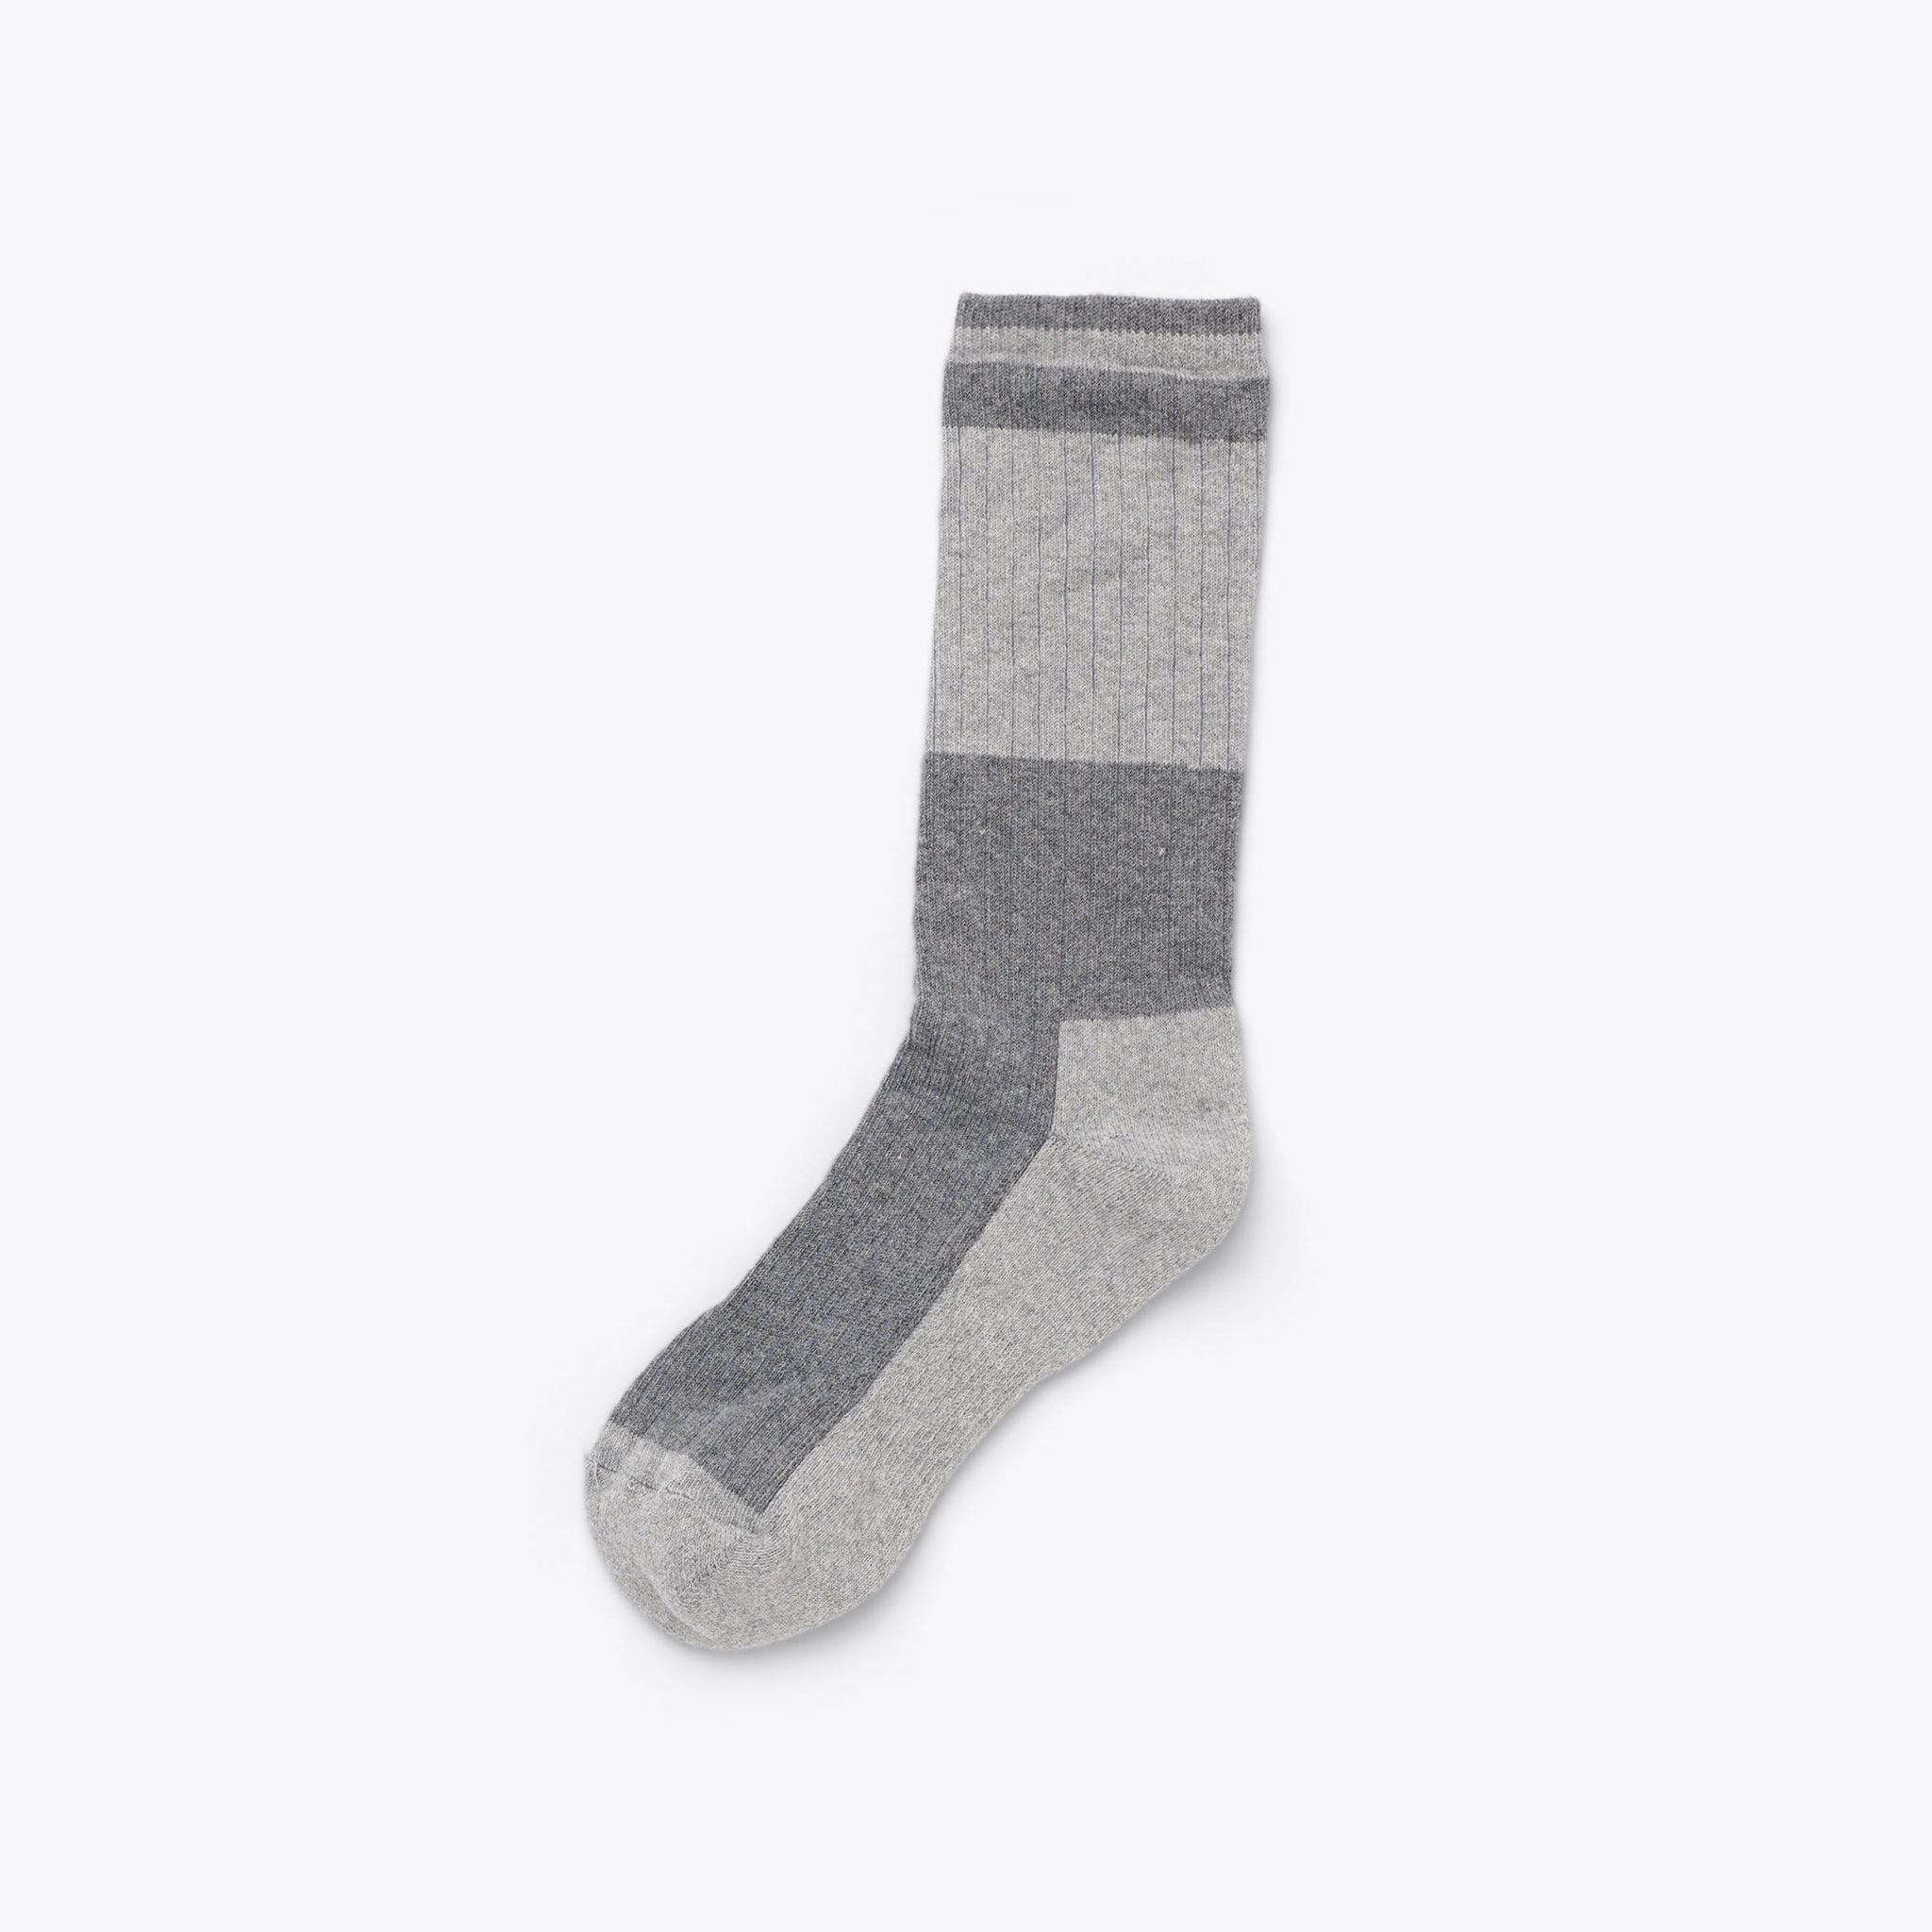 Product Image 1 of the Cotton Crew Sock Charcoal/Grey Socks Nisolo 